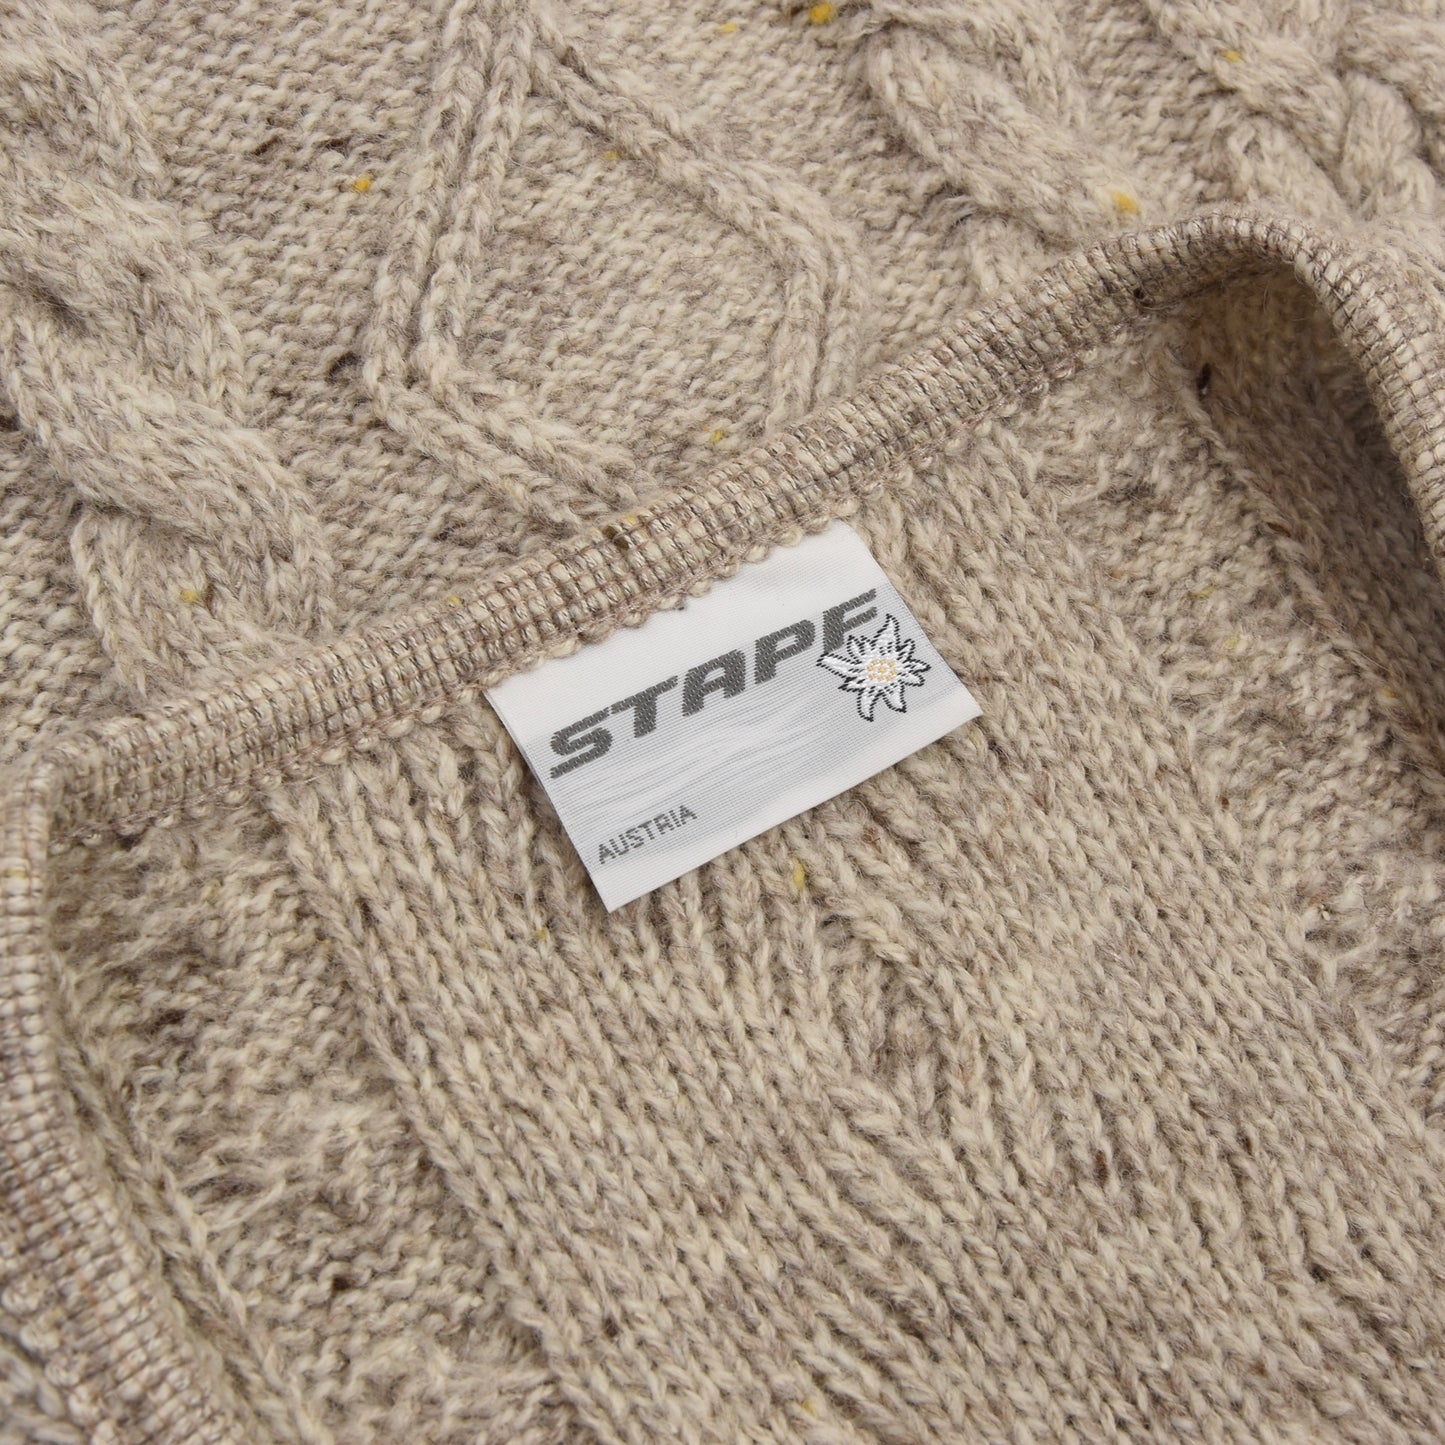 Stapf Tirol Cableknit Wool/Cotton/Silk Sweater Vest Size 58 - Oatmeal